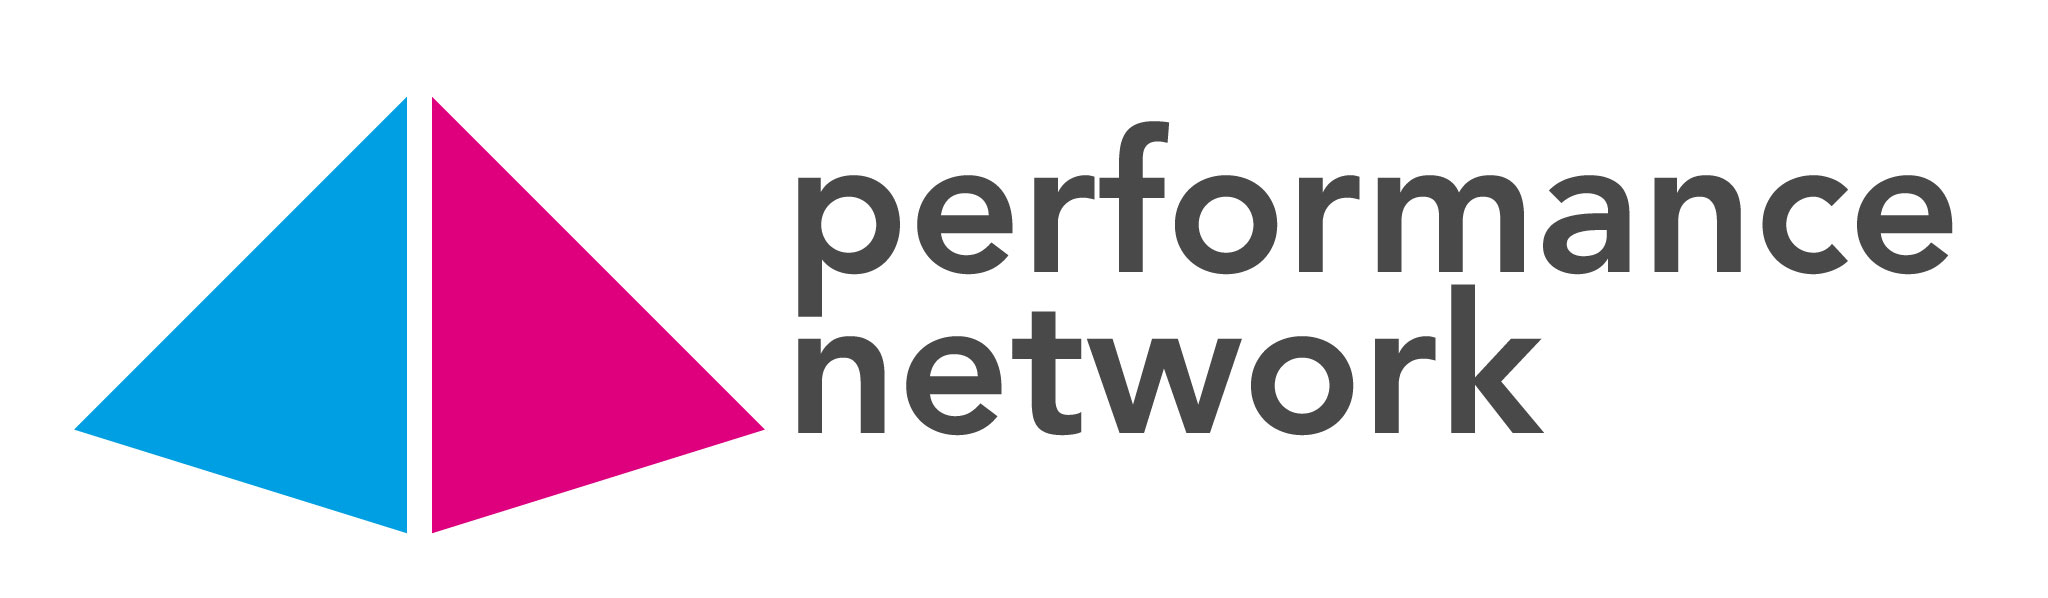 uppr Performance Network